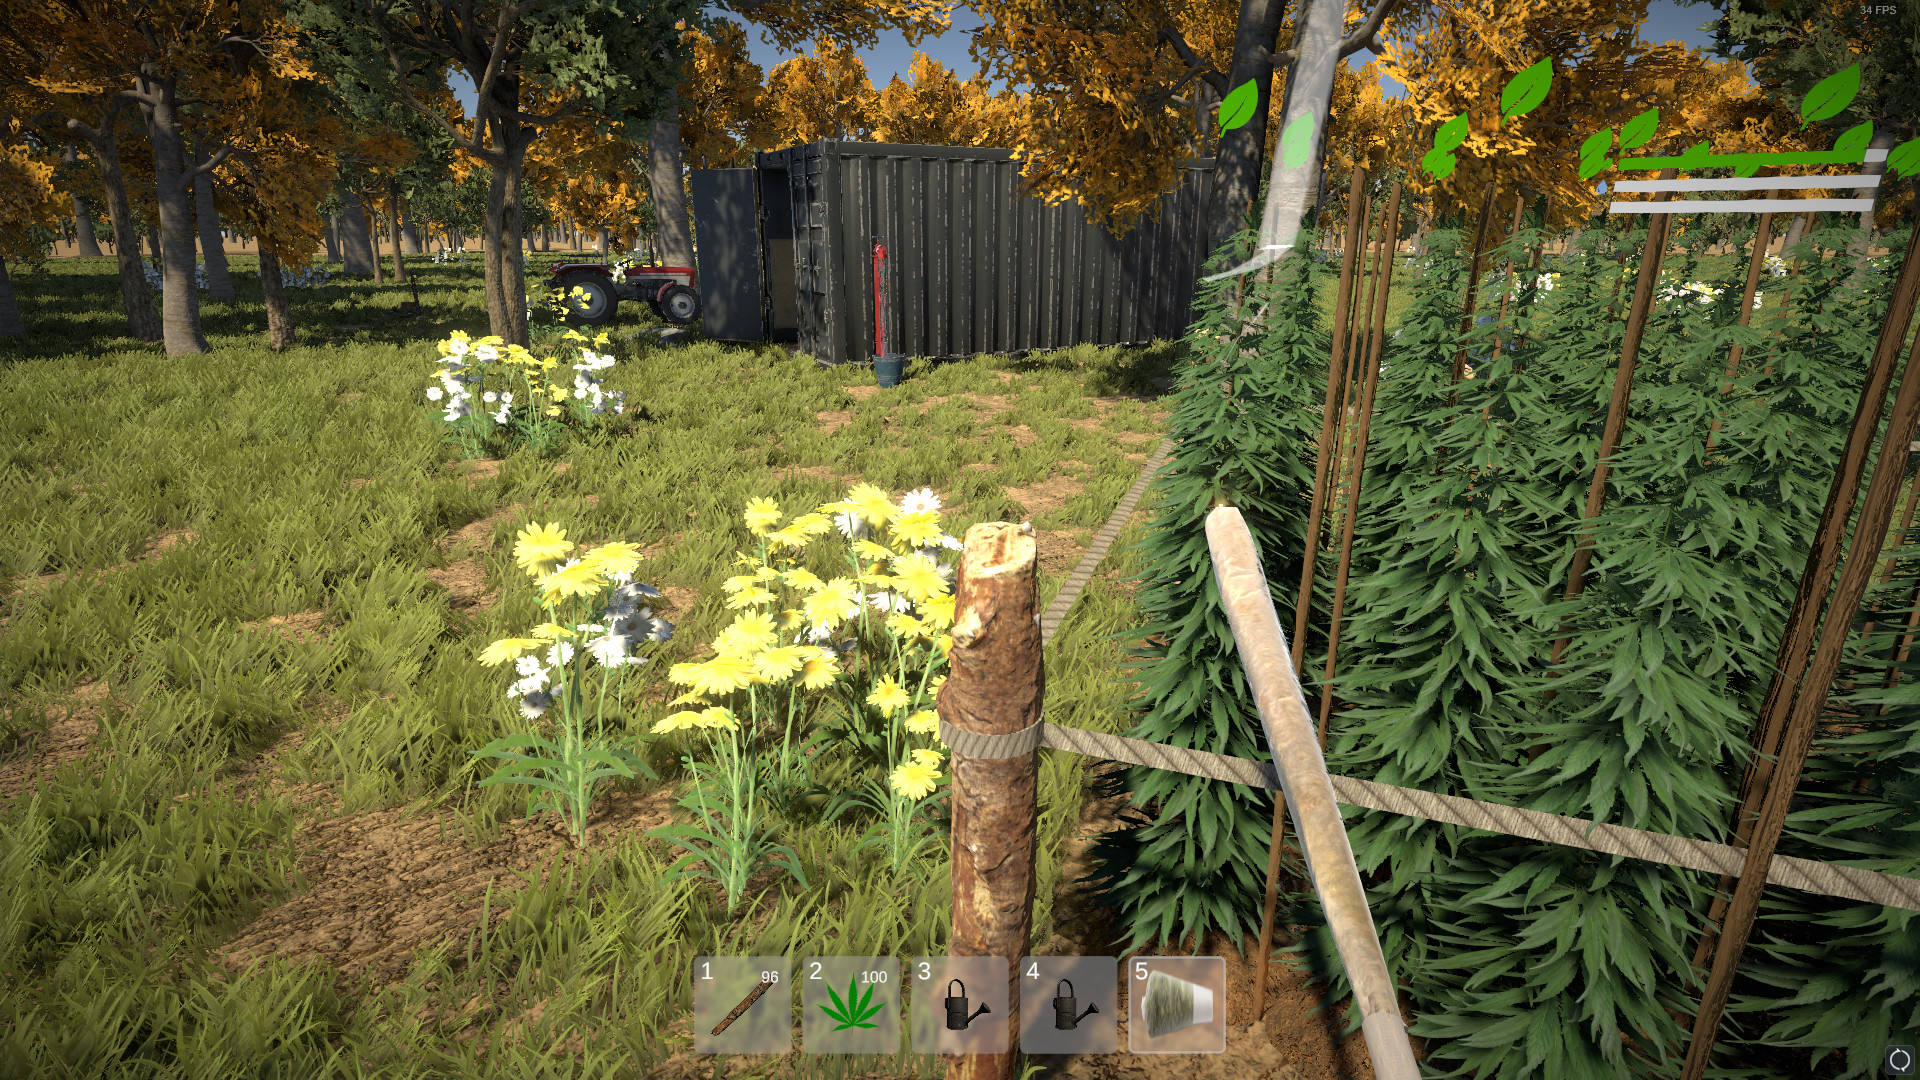 Weed Farmer Simulator Free Download